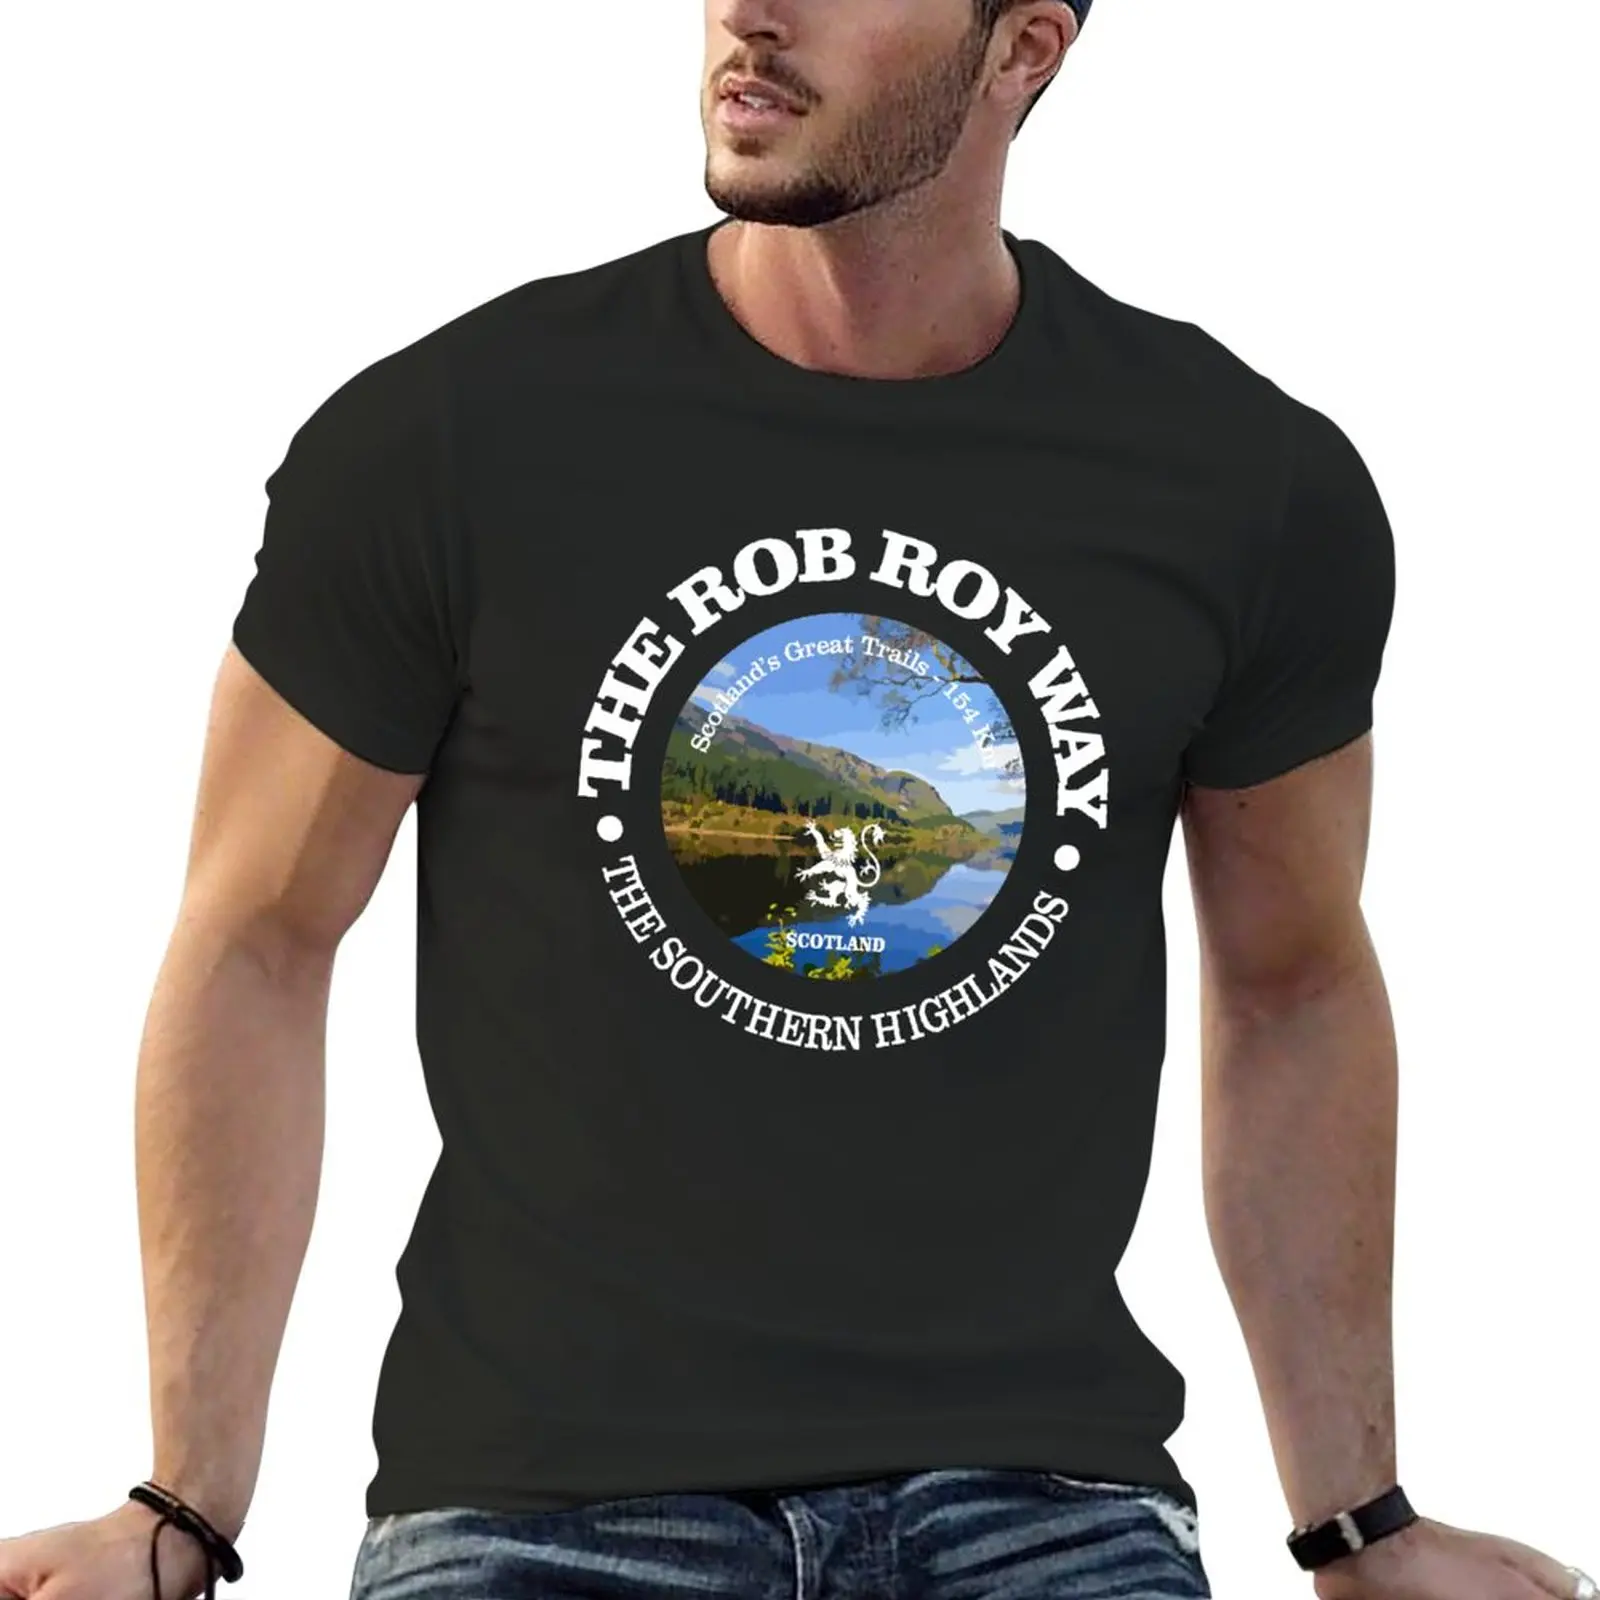 New Rob Roy Way (rd) T-Shirt Blouse Short t-shirt black t shirts vintage clothes oversized t shirts for men